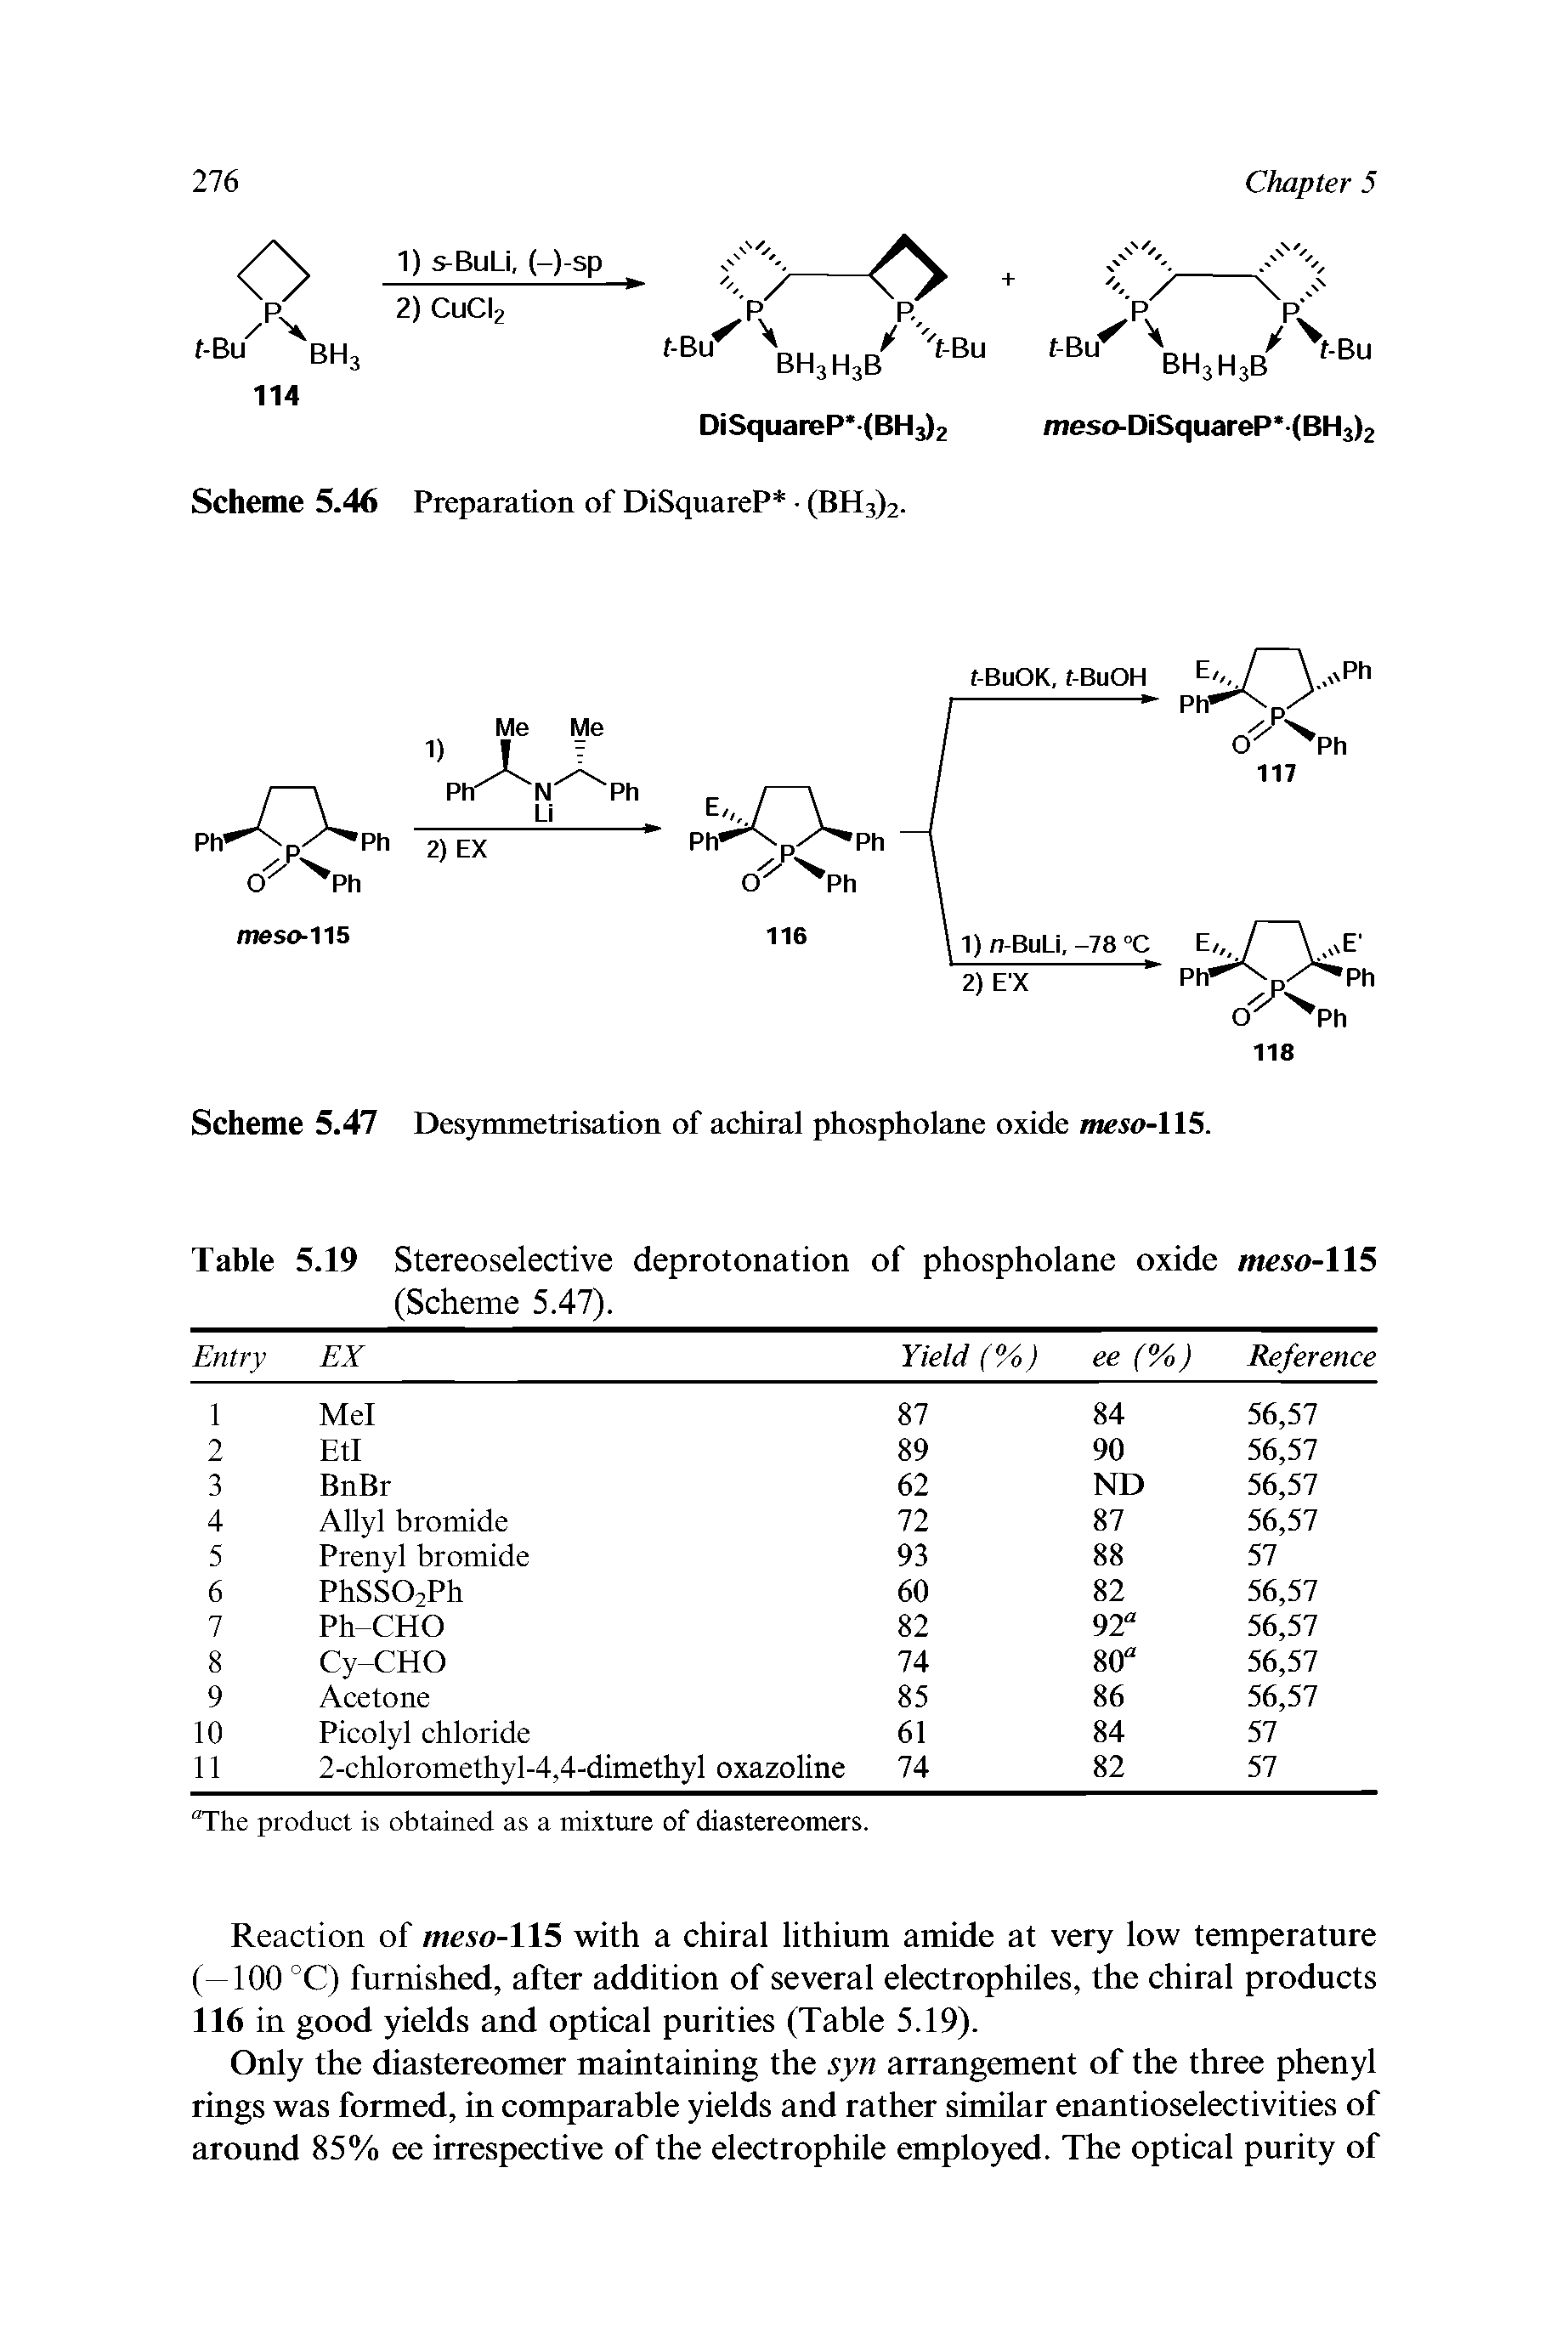 Scheme 5.47 Des5mimetrisation of achiral phospholane oxide meso-llS.